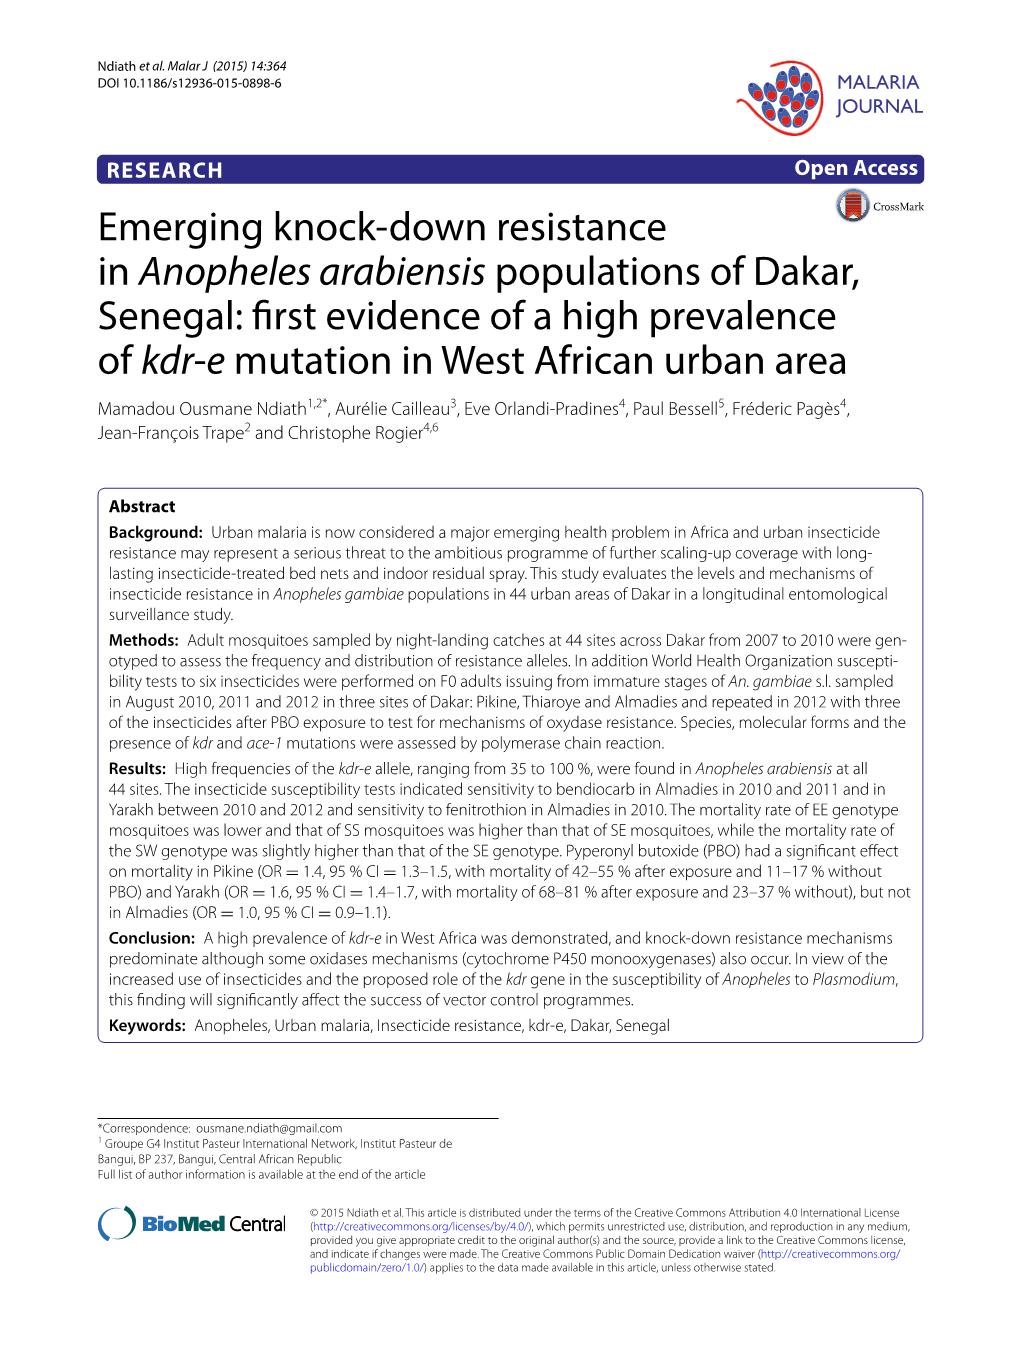 Emerging Knock-Down Resistance in Anopheles Arabiensis Populations of Dakar, Senegal